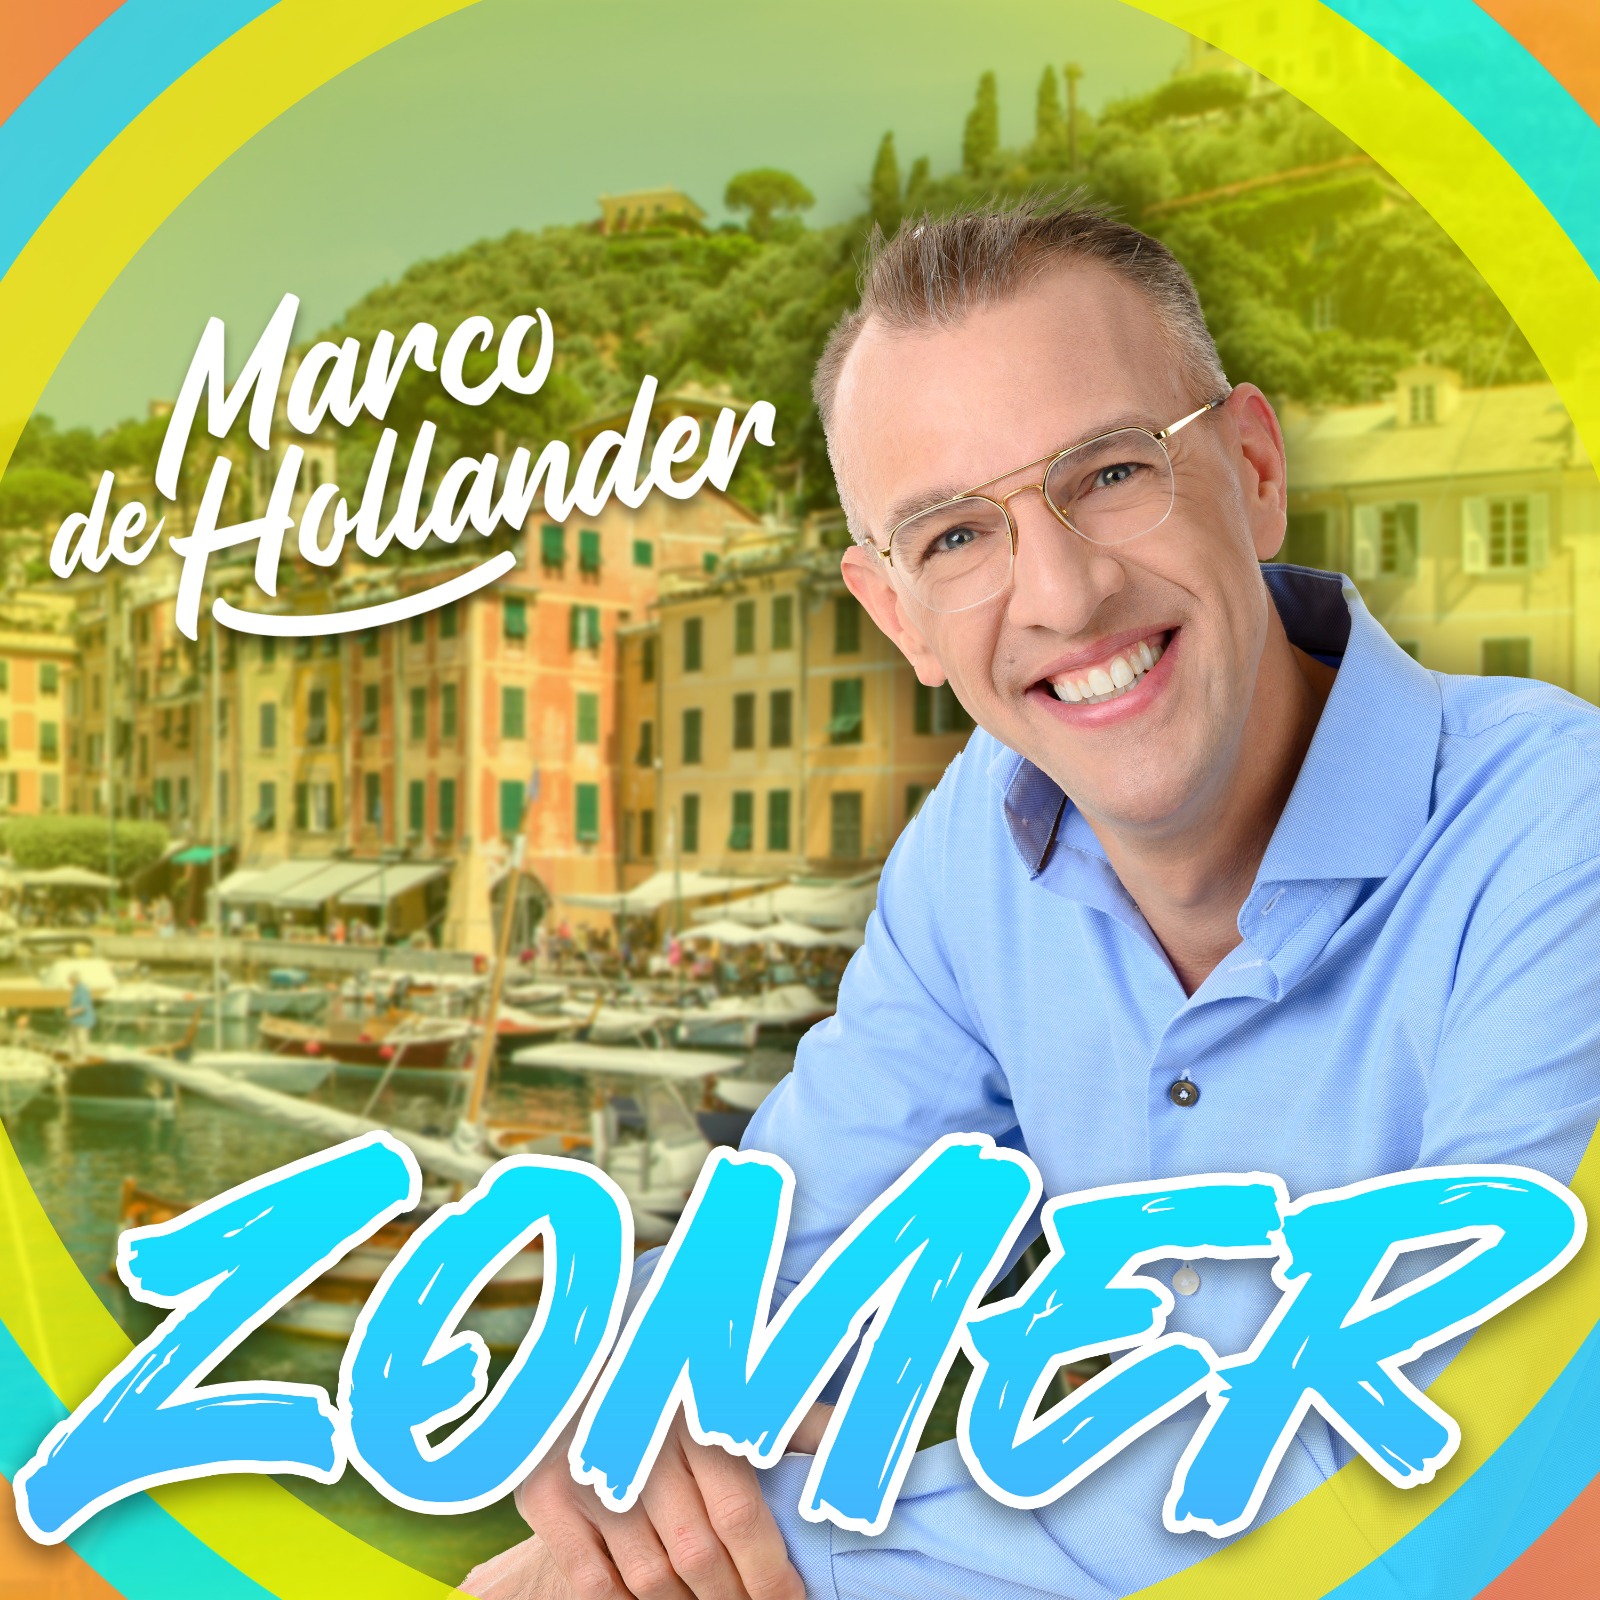 Marco de Hollander – Zomer – Week 20